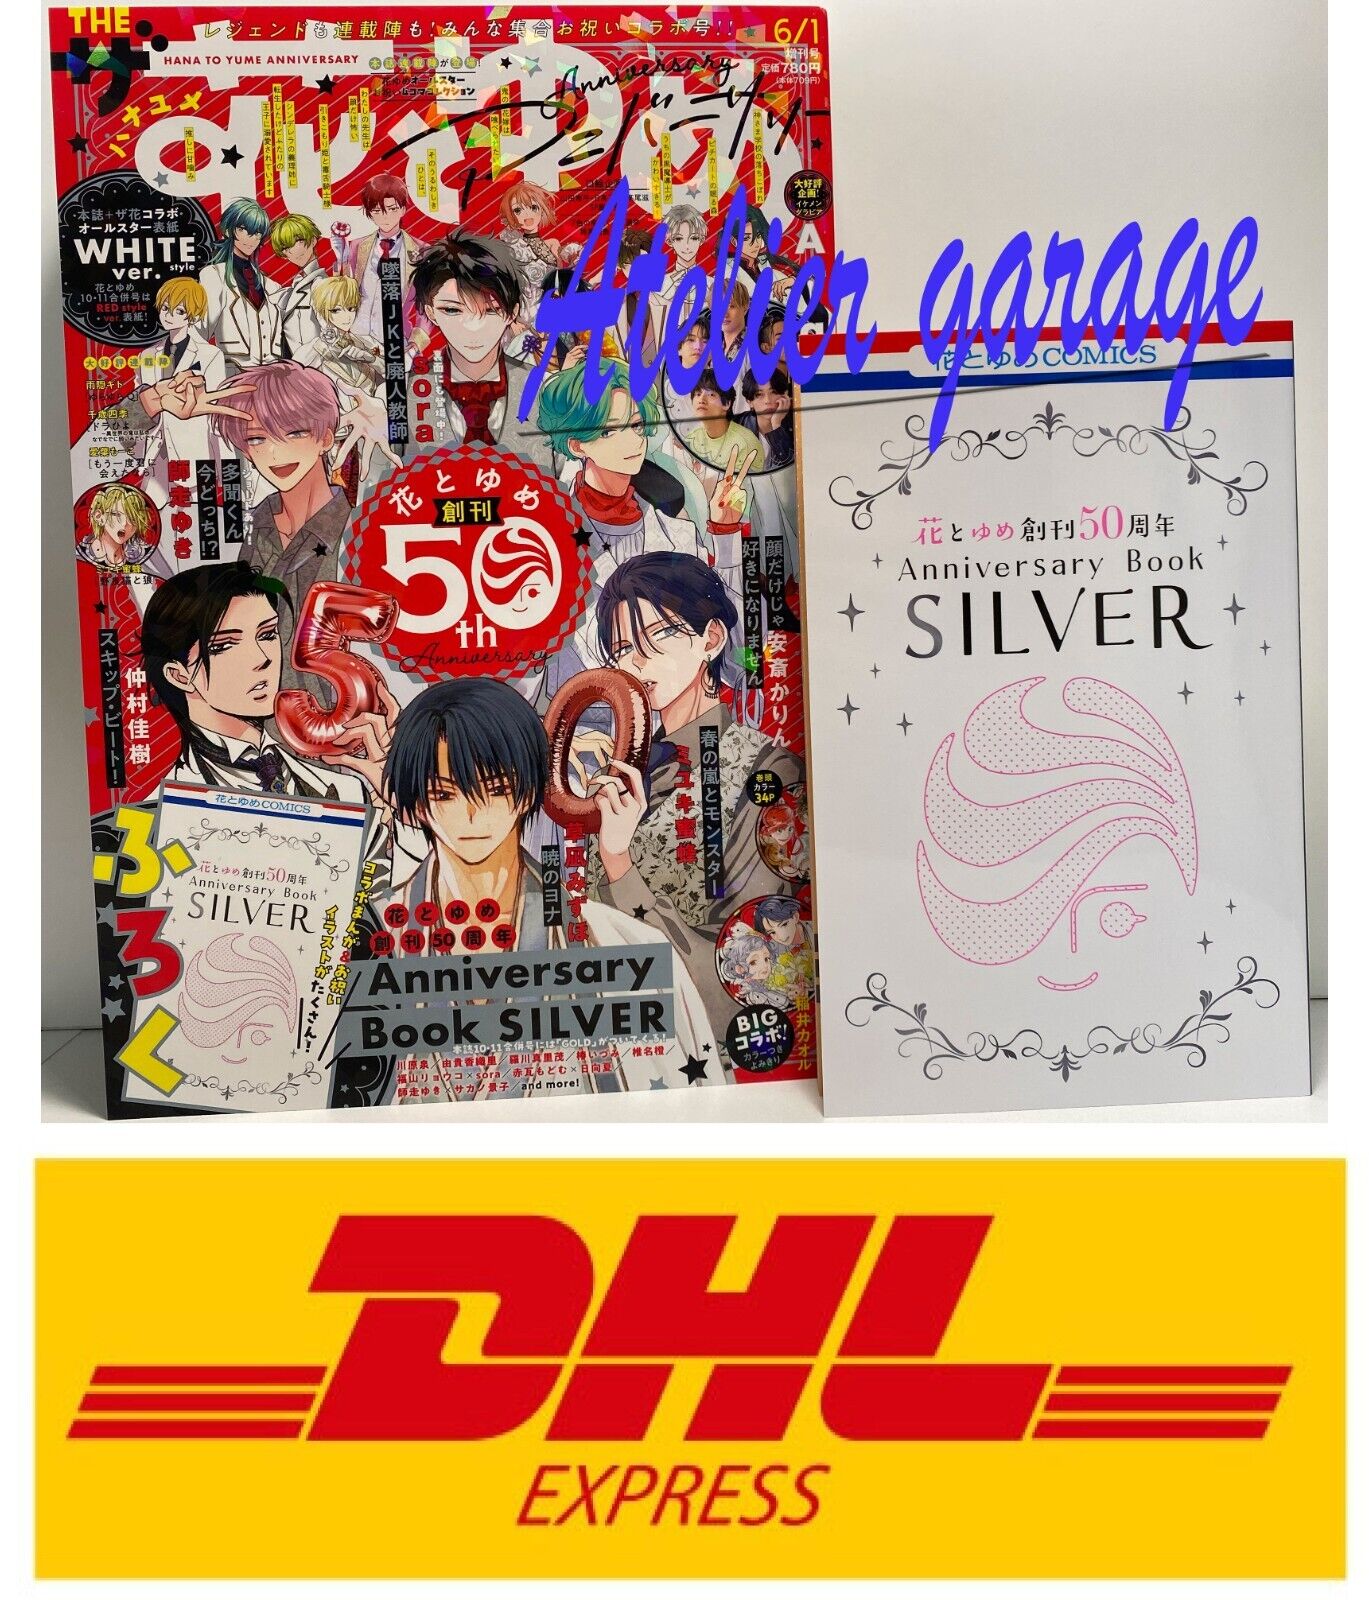 New F/S Hana to Yume Anniversary + Anniversary Book Silver Set Japanese